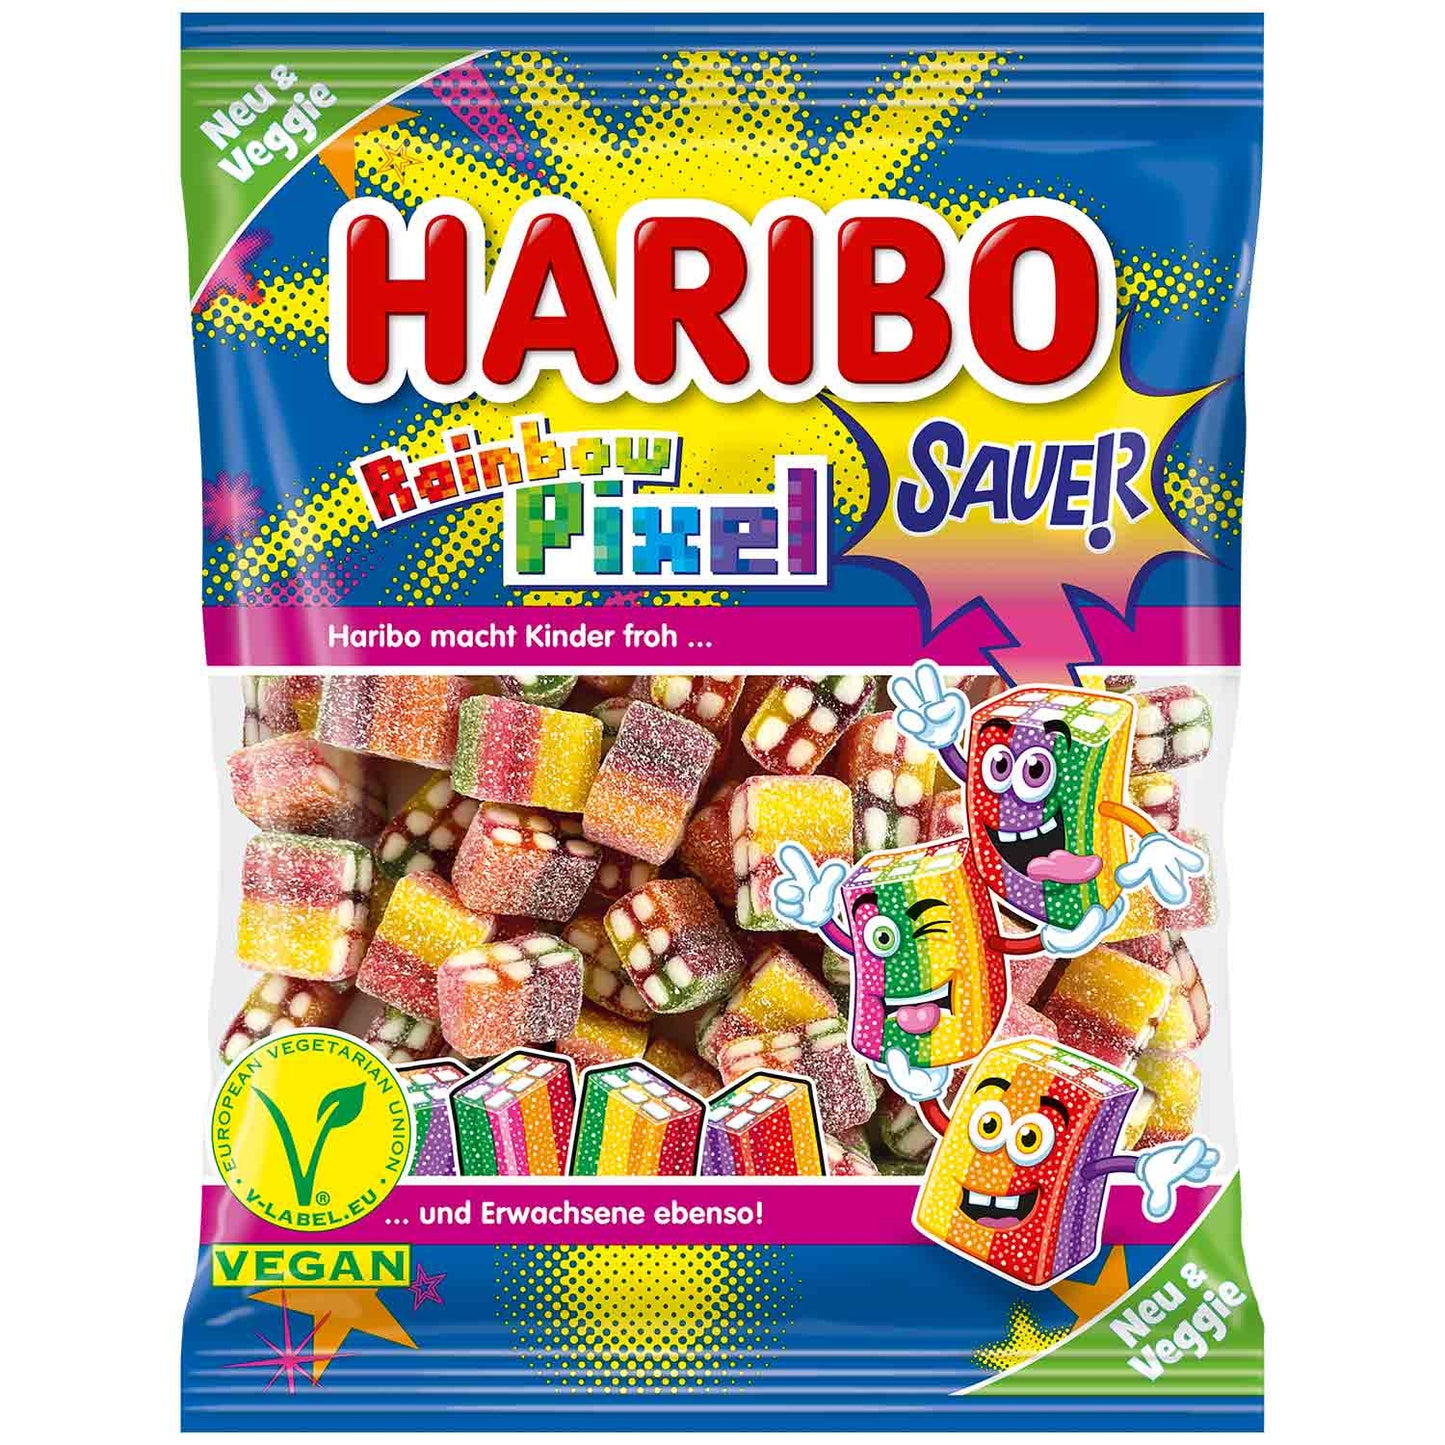 Haribo Rainbow Pixel sauer vegan 160g - Candyshop.ch